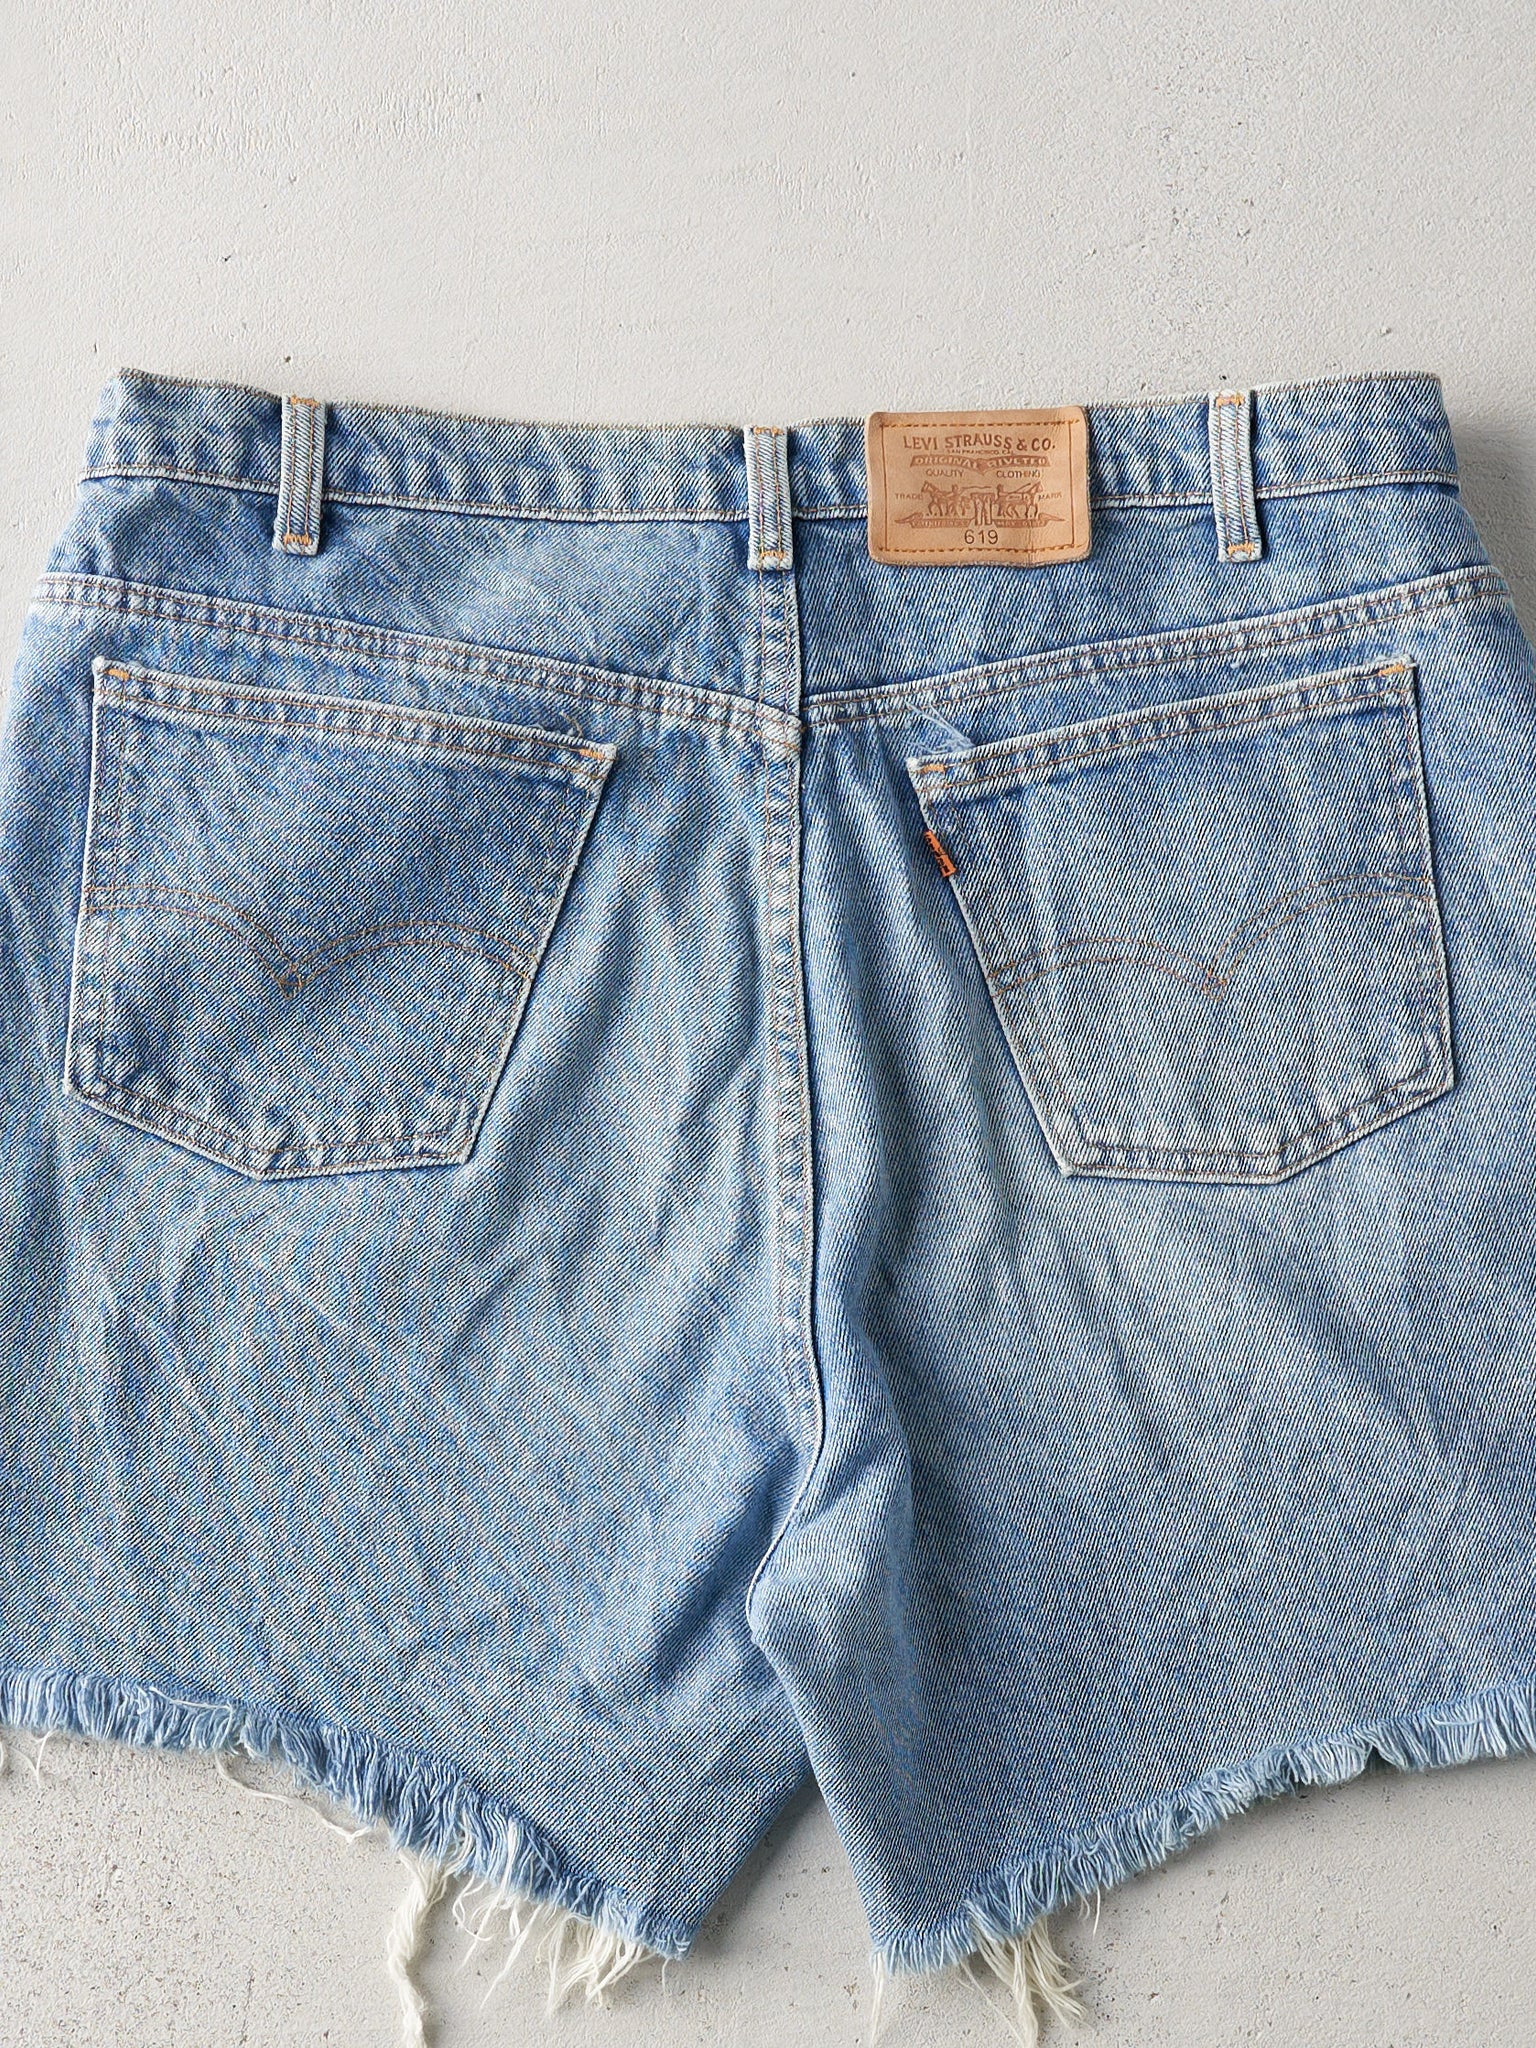 Vintage 80s Light Wash Levi 619 Orange Tab Cut Off Shorts (36x5.5)